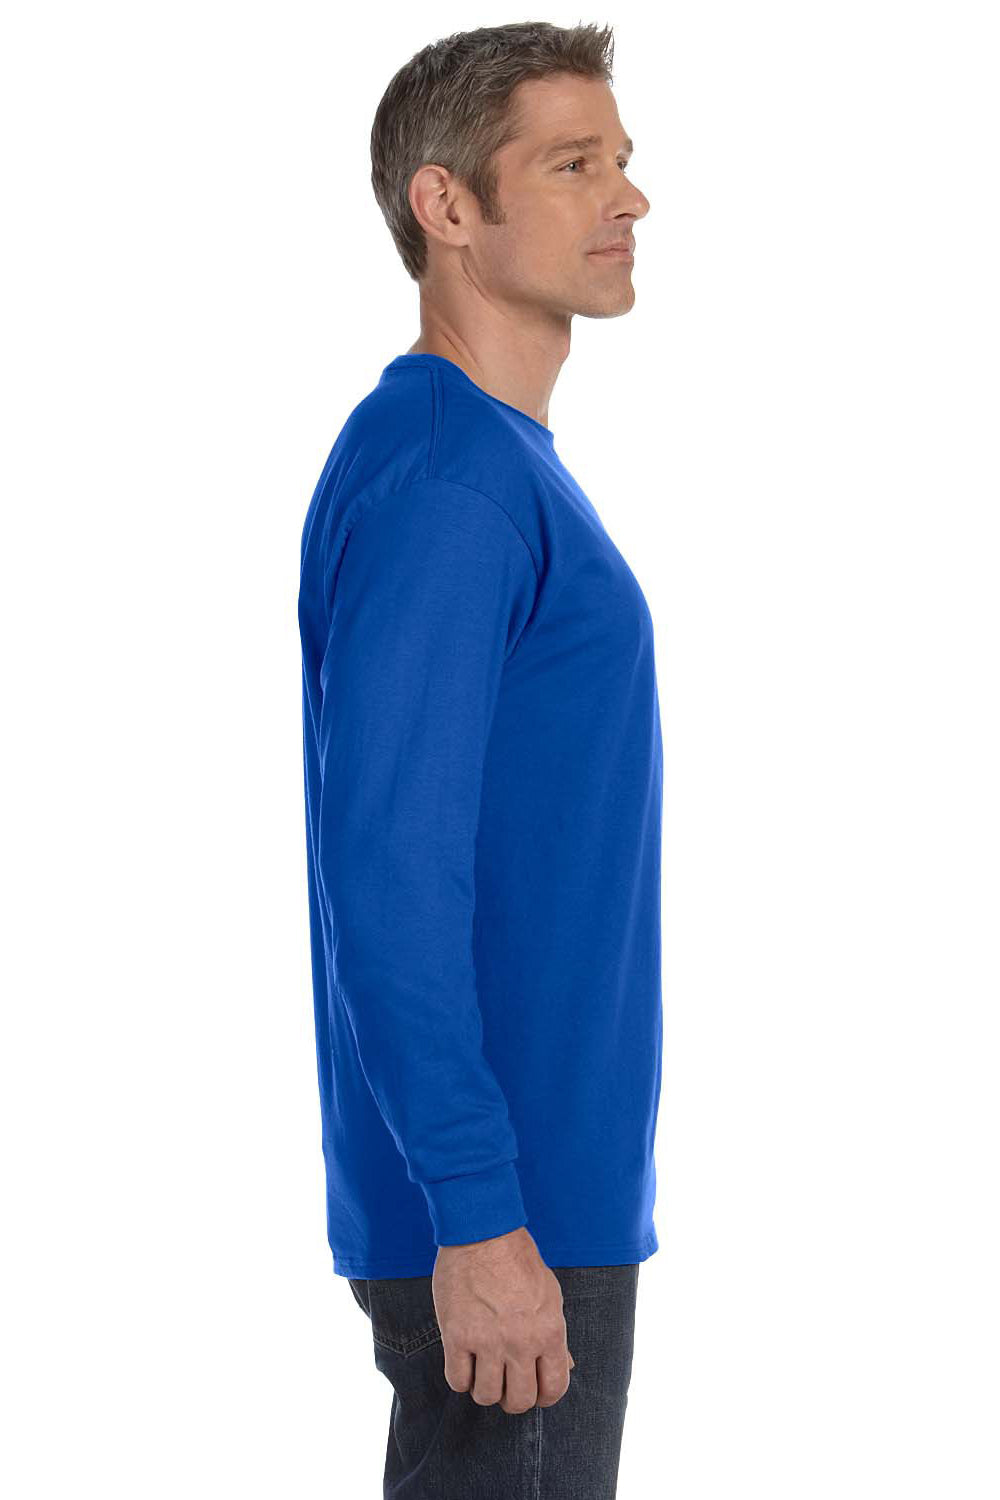 Gildan G540 Mens Long Sleeve Crewneck T-Shirt Royal Blue Side